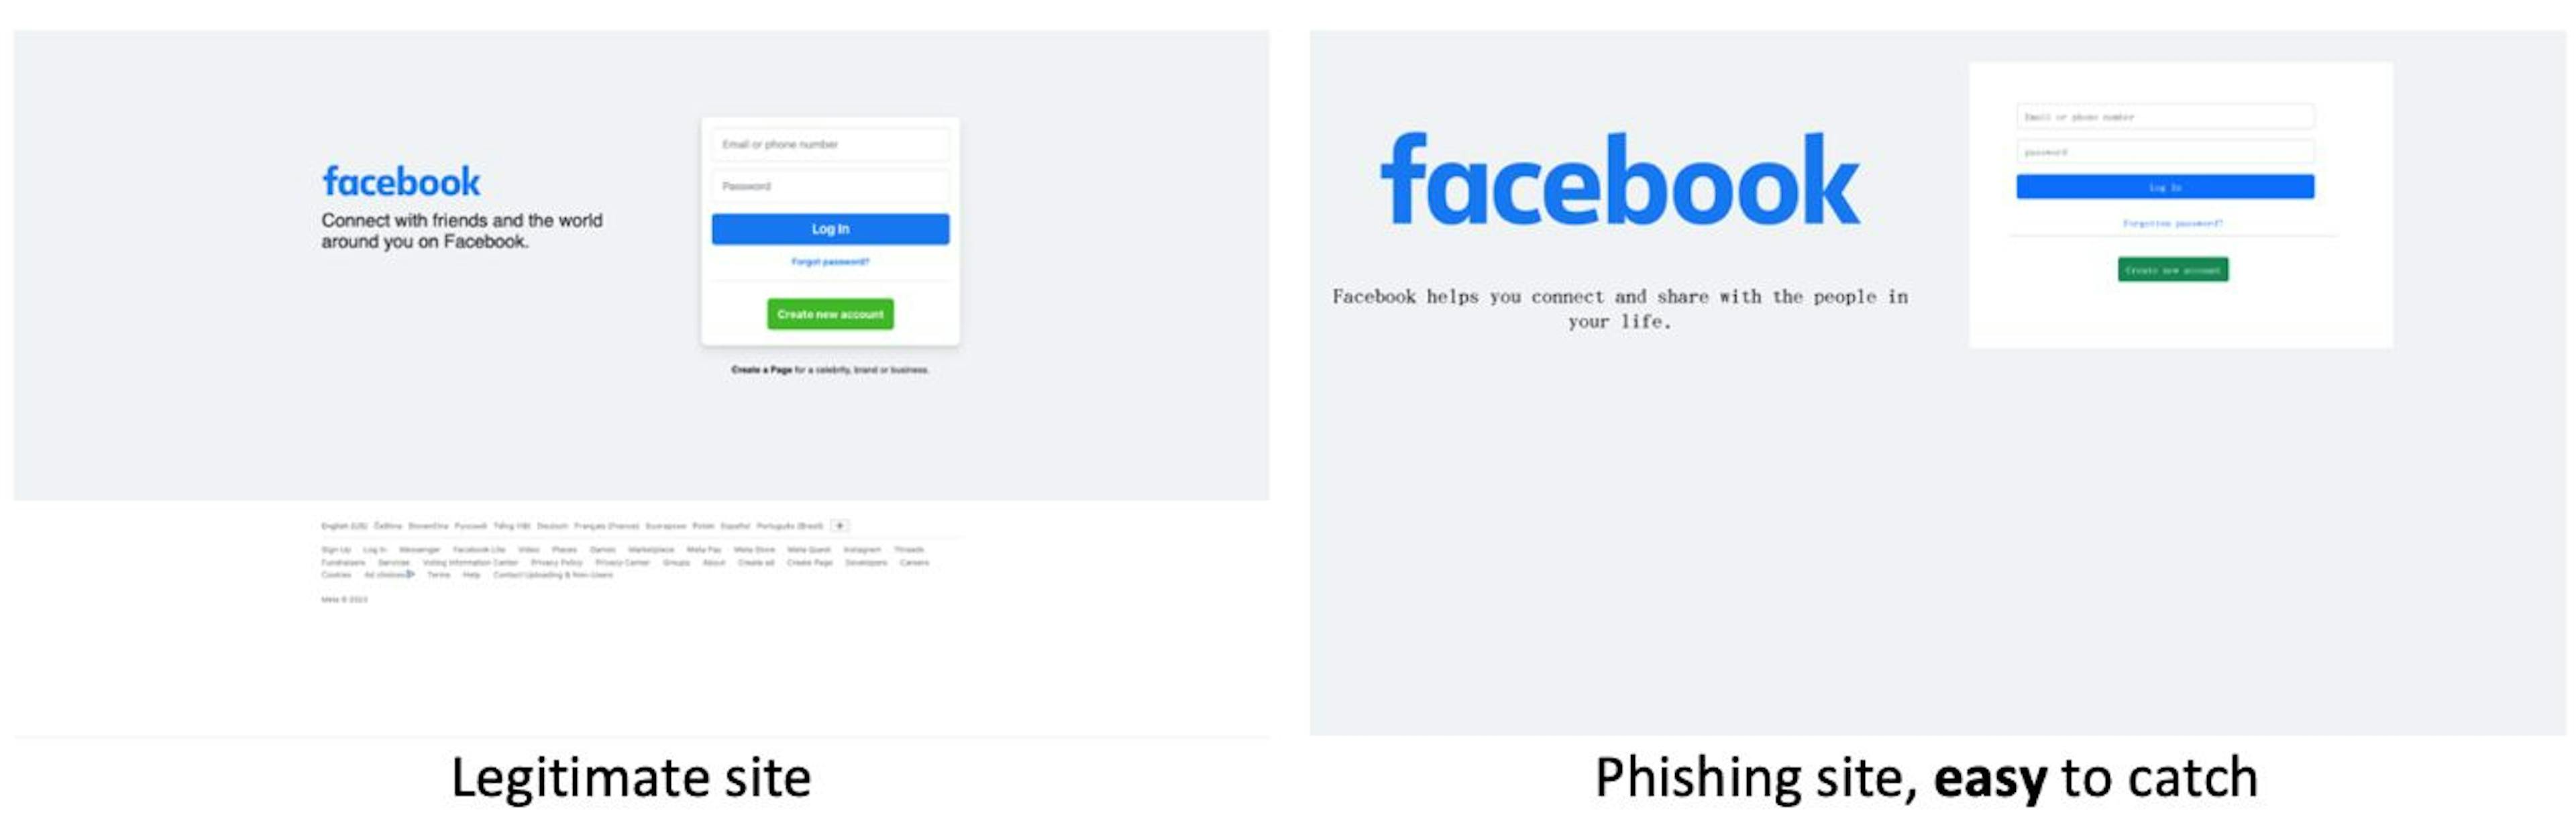 Site legítimo versus site de phishing